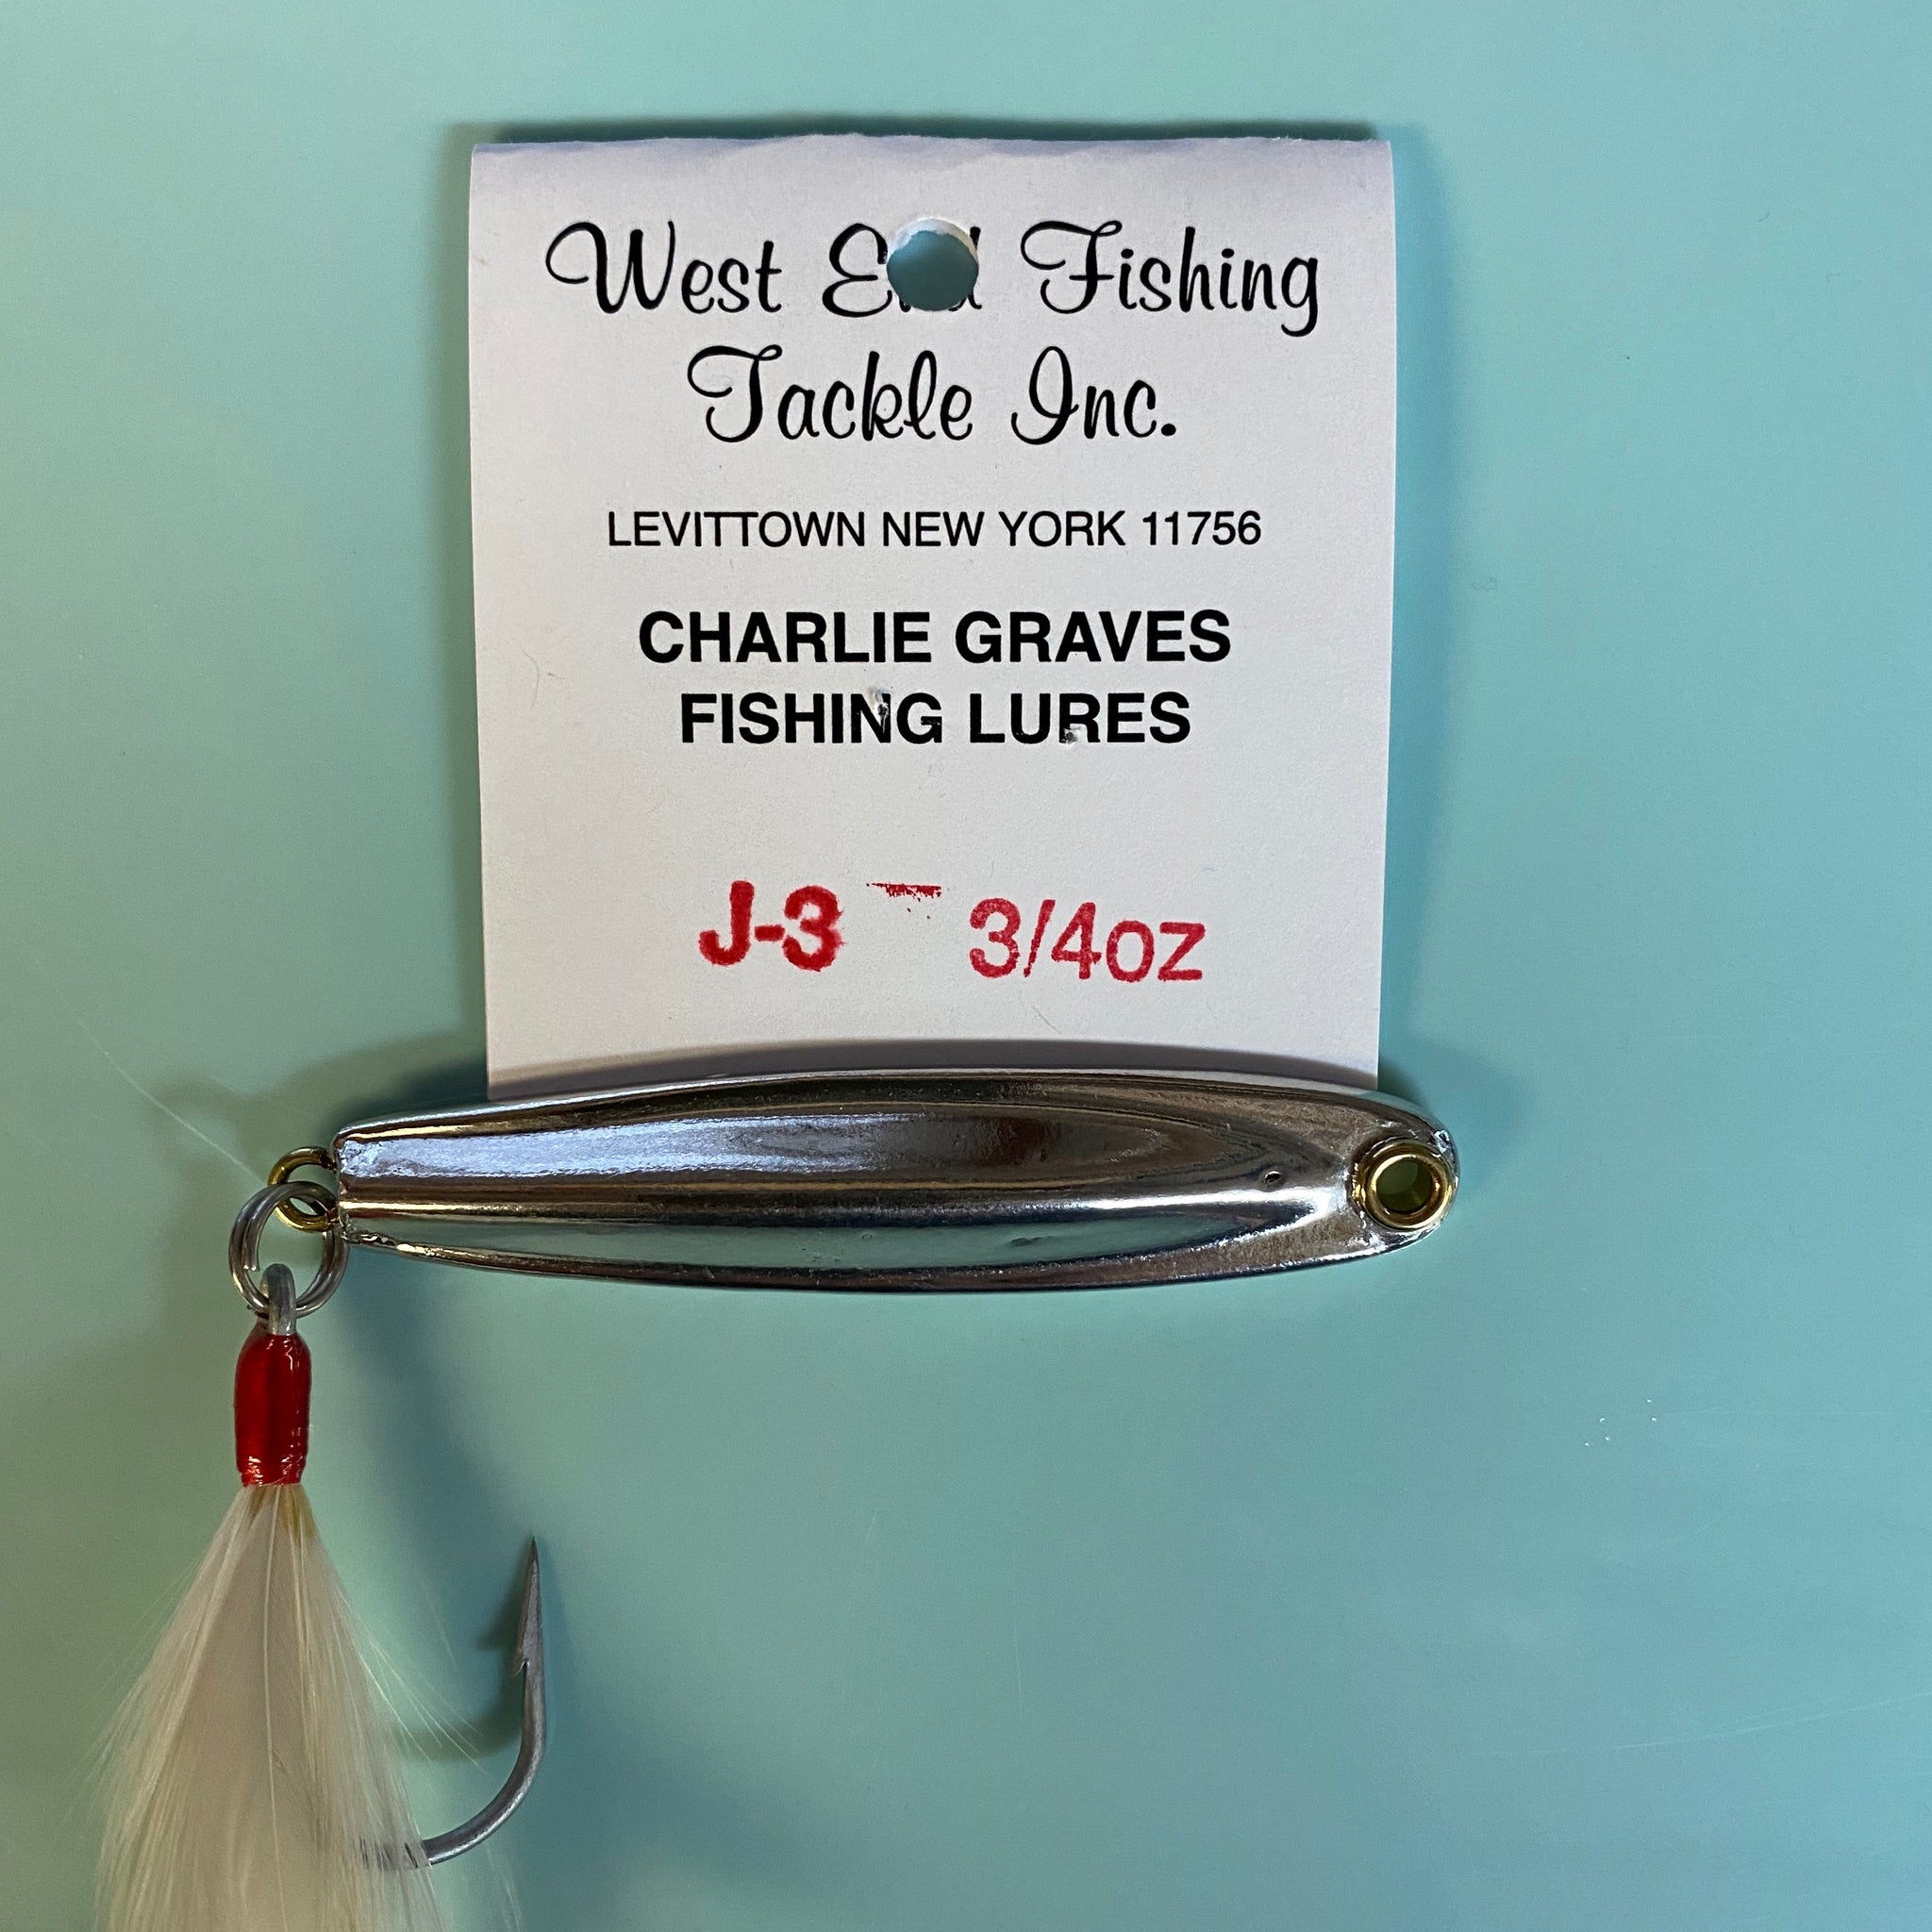 Charlie Graves Tin Lures